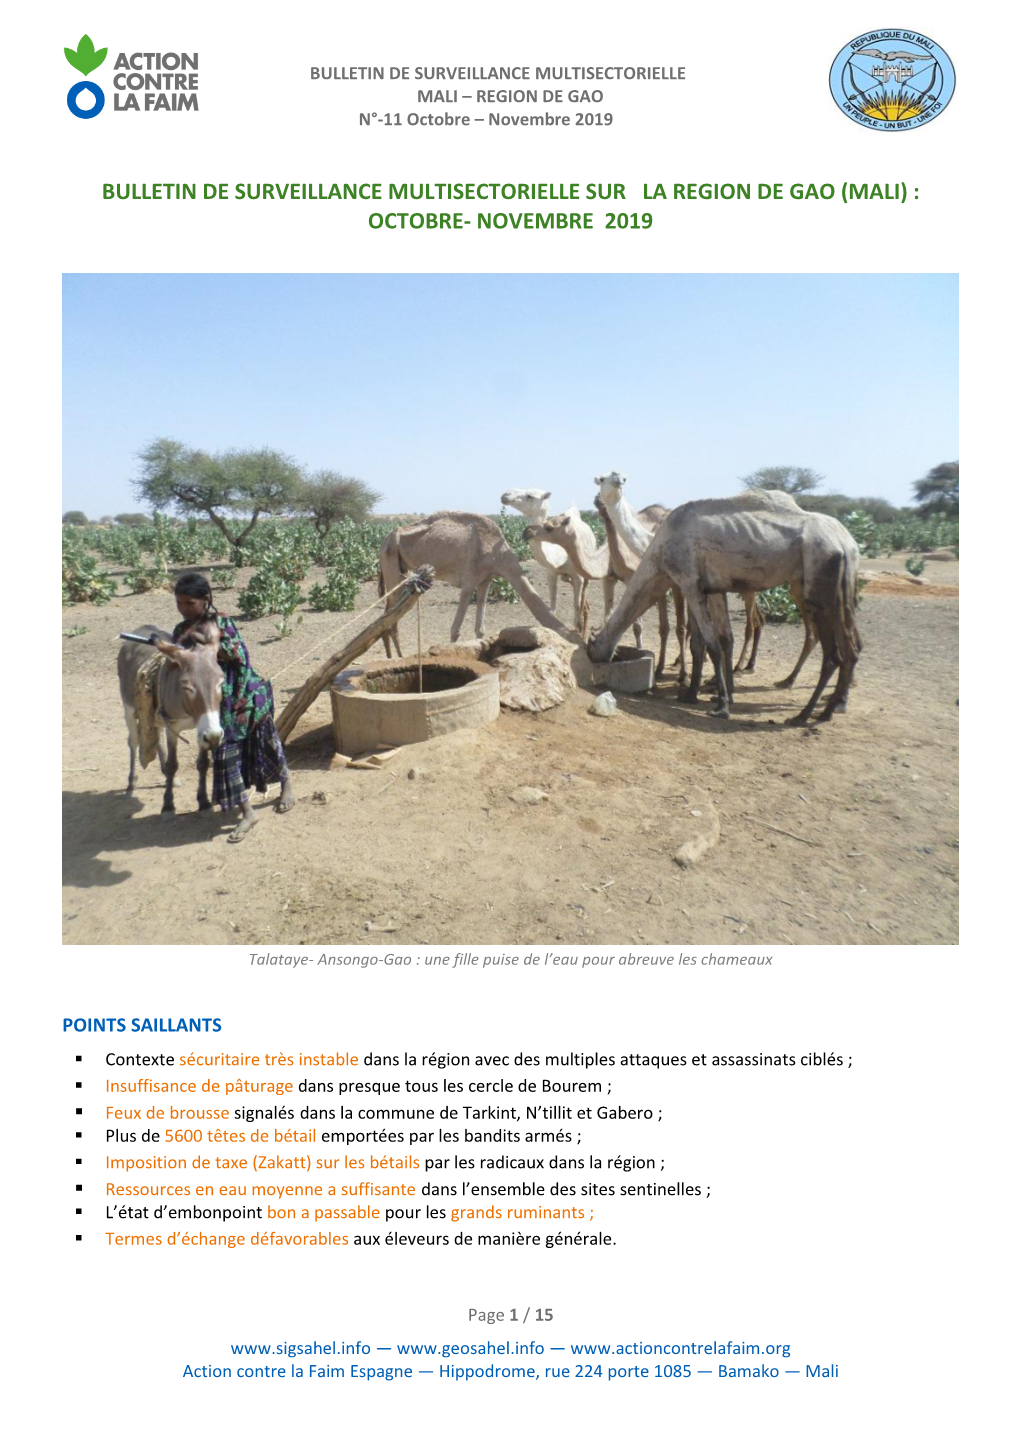 Bulletin De Surveillance Multisectorielle Sur La Region De Gao (Mali) : Octobre- Novembre 2019